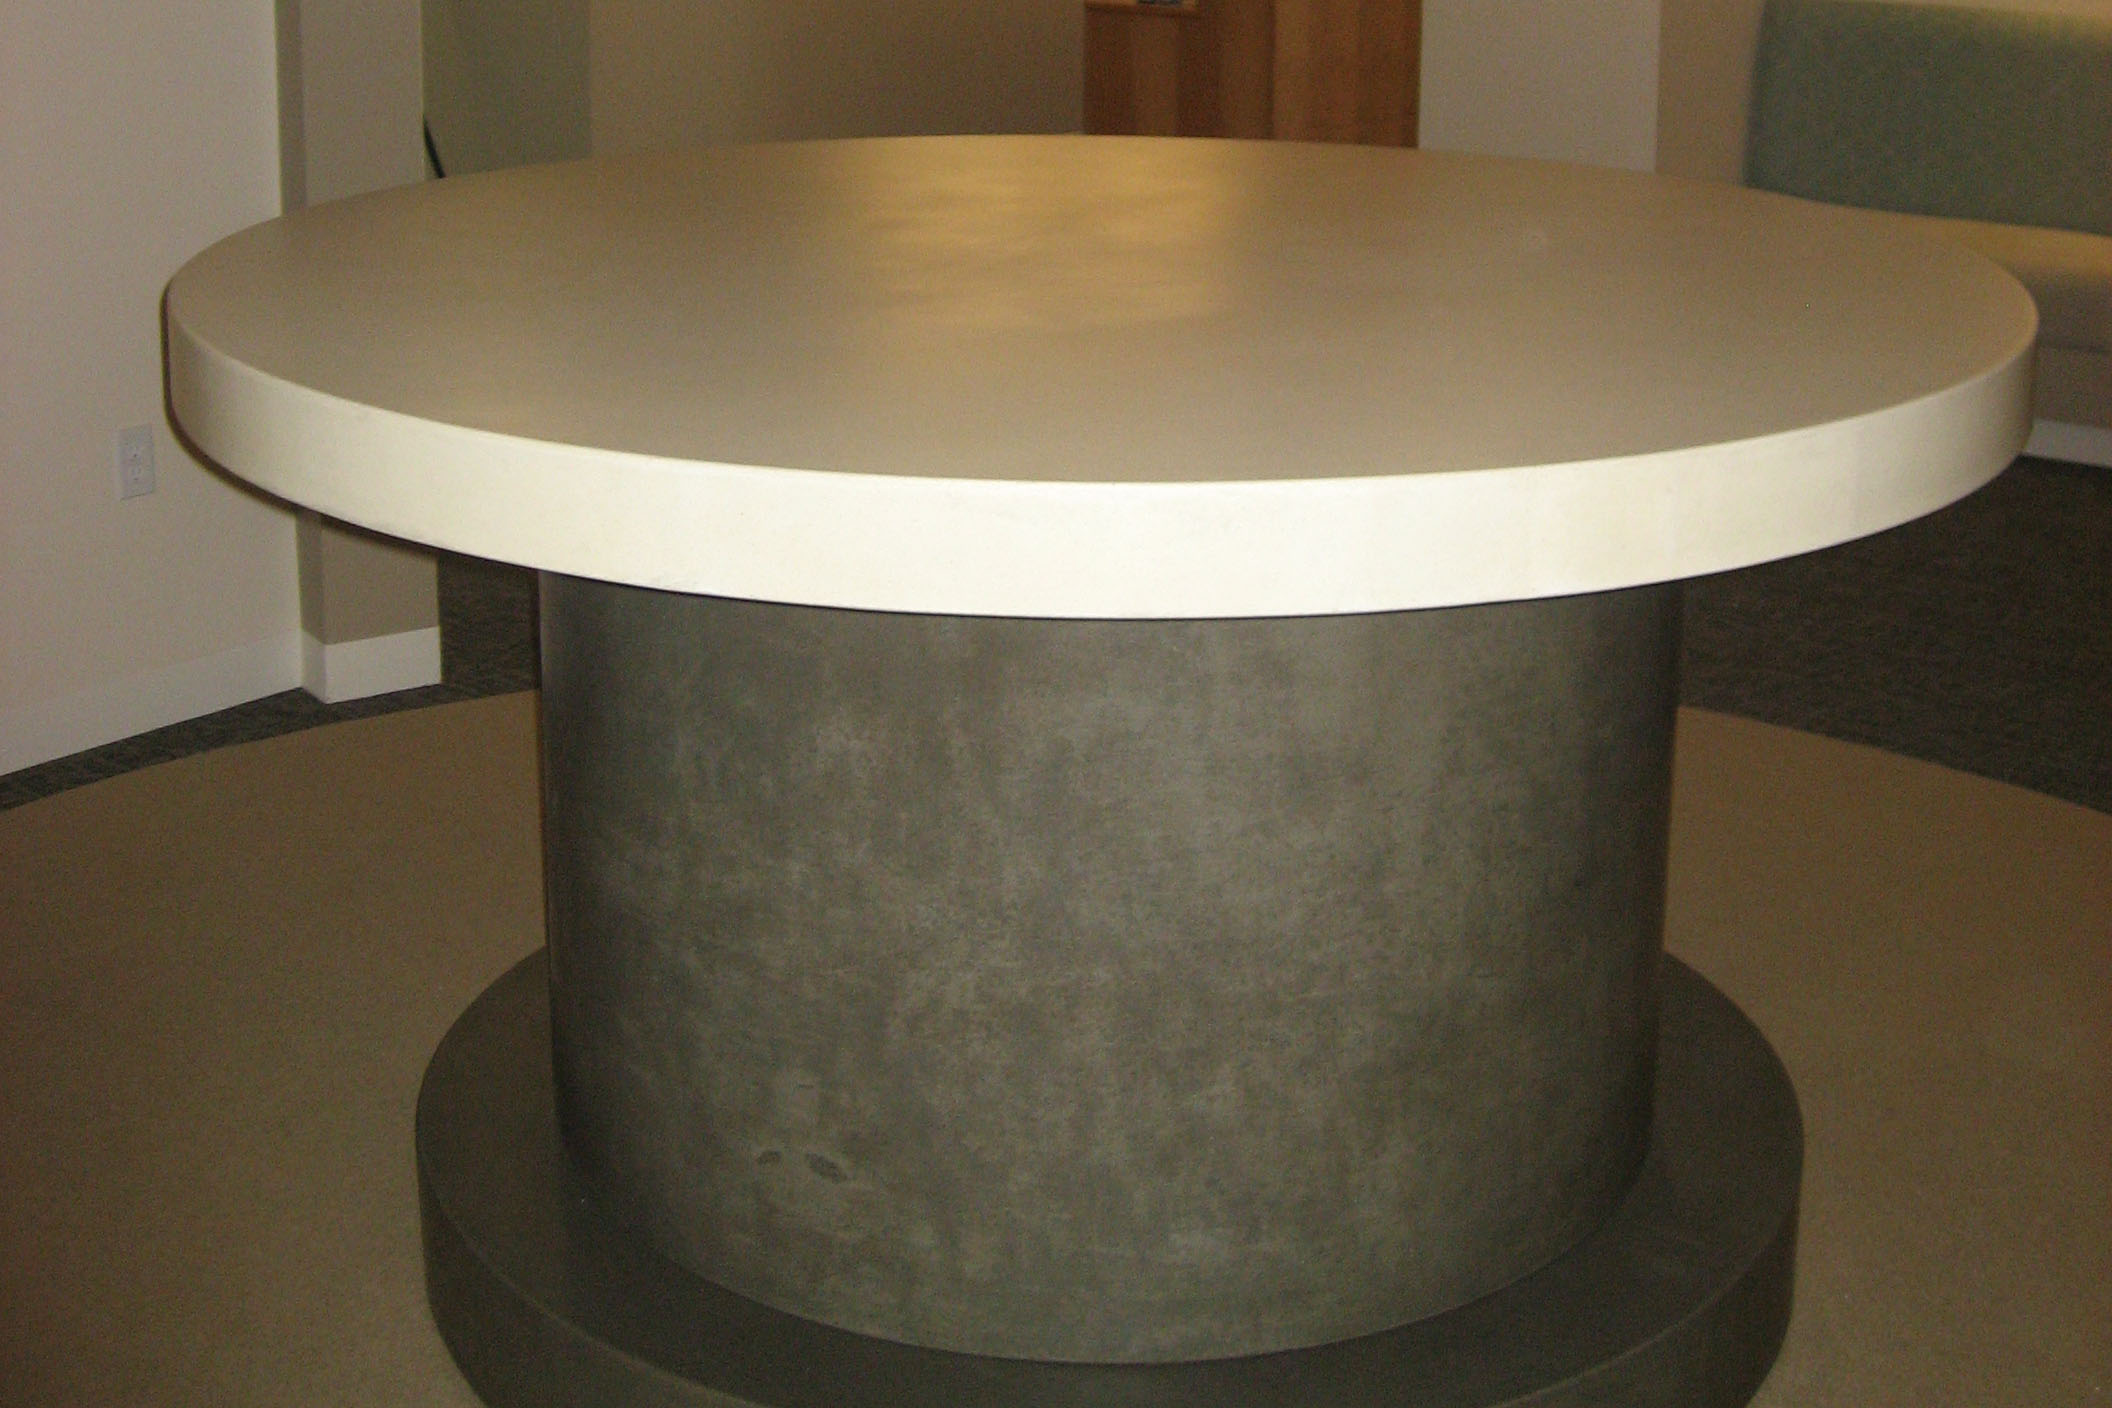 Concrete Table Top and Concrete Base